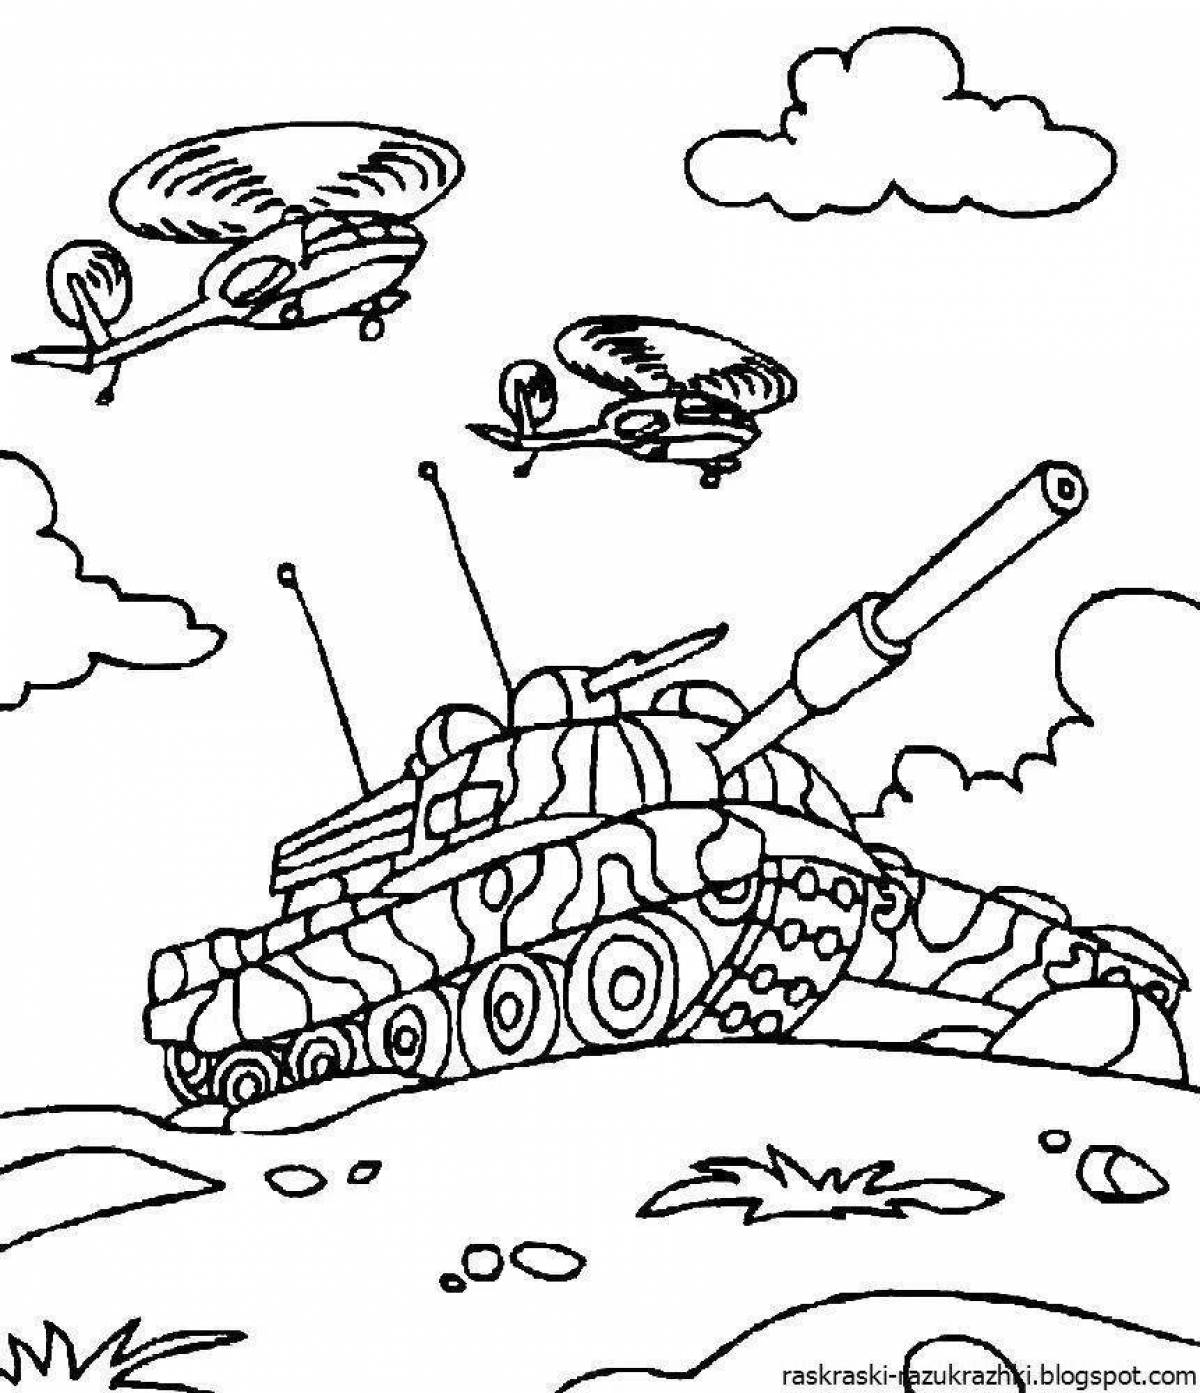 Coloring page energetic tankman